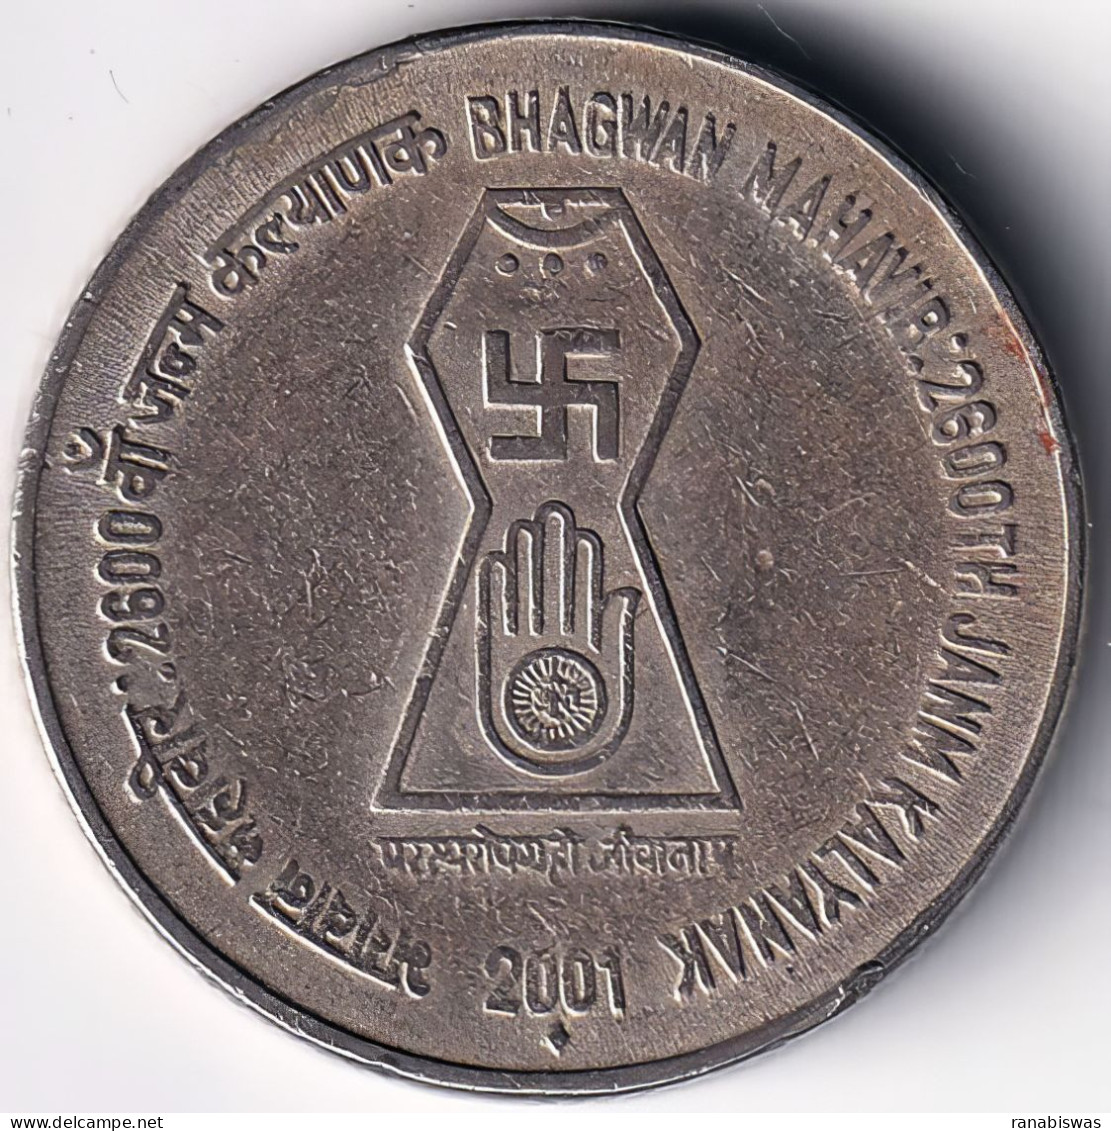 INDIA COIN LOT 132, 5 RUPEES 2001, BHAGAWAN MAHAVIR, BOMBAY MINT, AUNC, SCARE - Inde